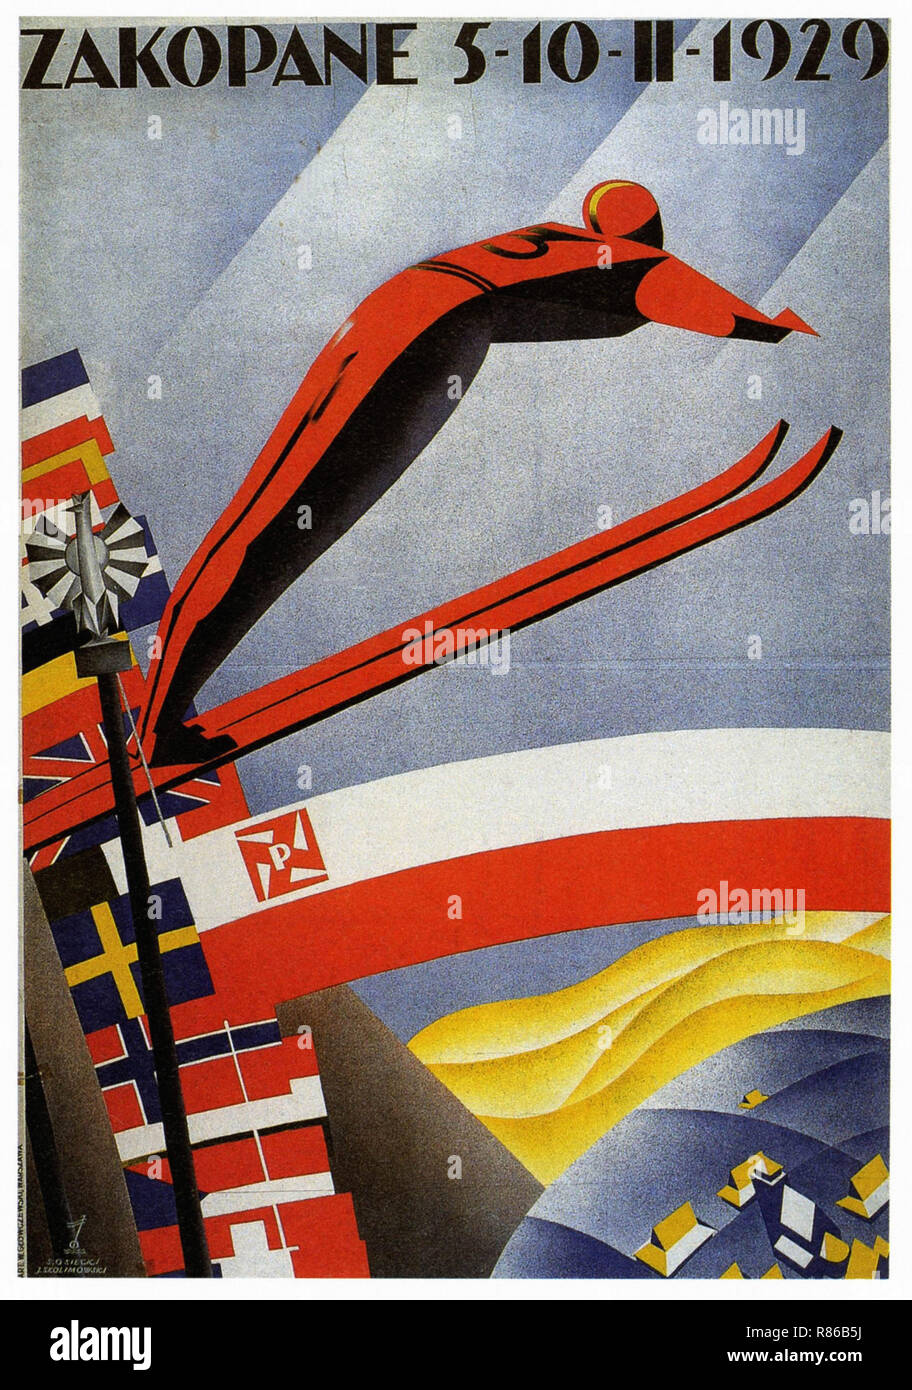 1929 Zakopane Ski Festival - Vintage advertising poster Stock Photo